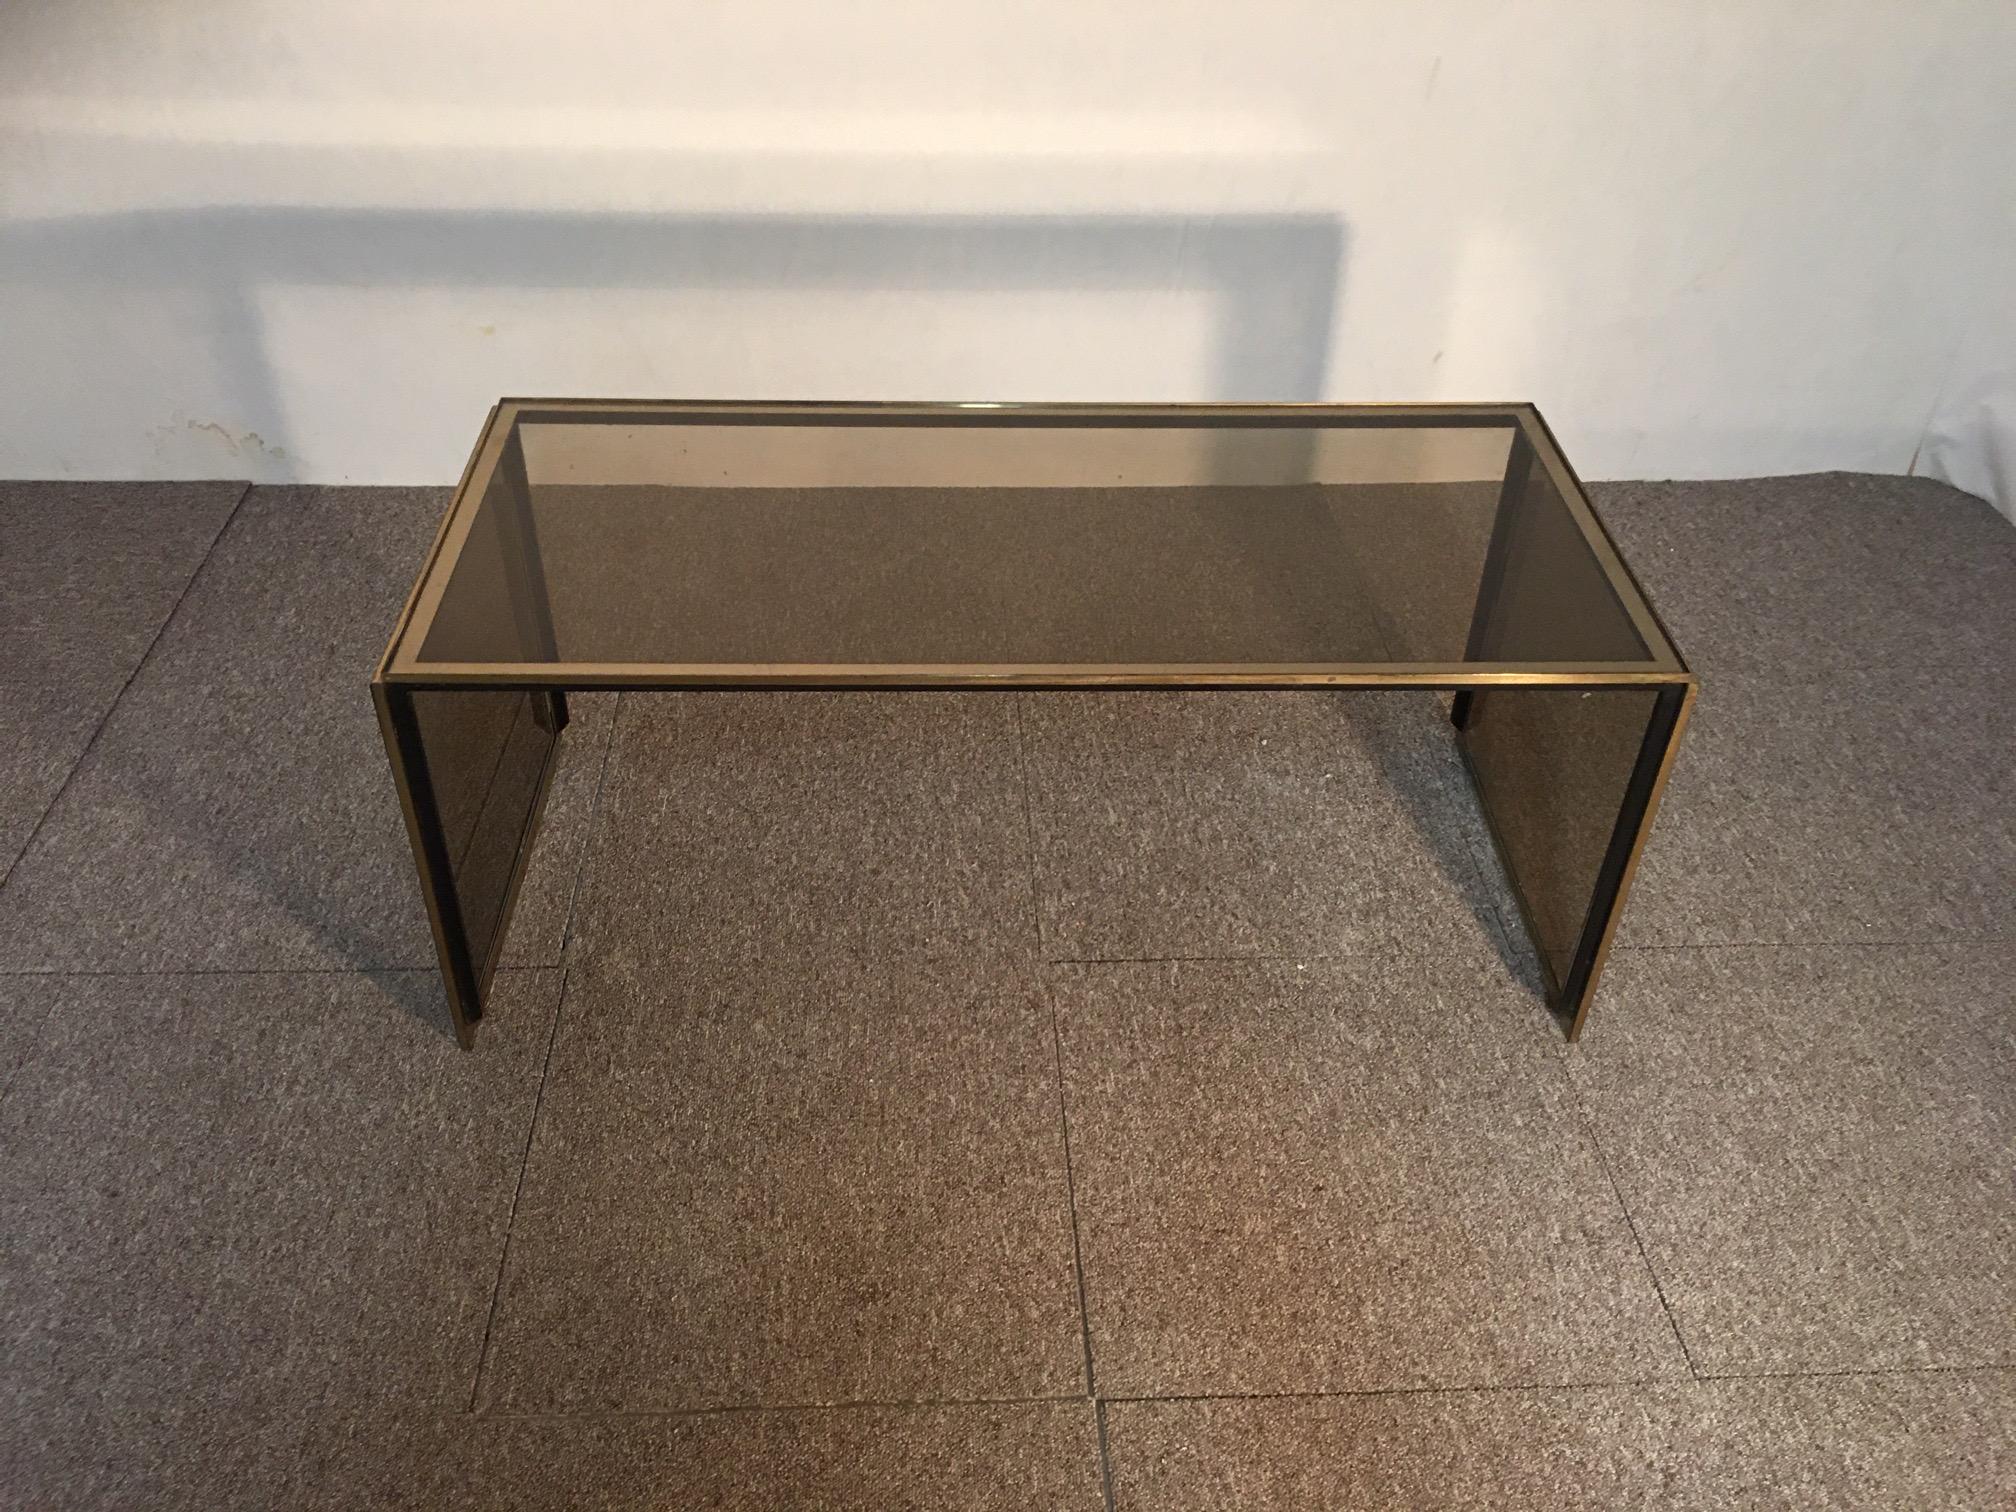 Aesthetic Movement Glass Coffee Table, Italy, Romeo Rega, Design, 1960s For Sale